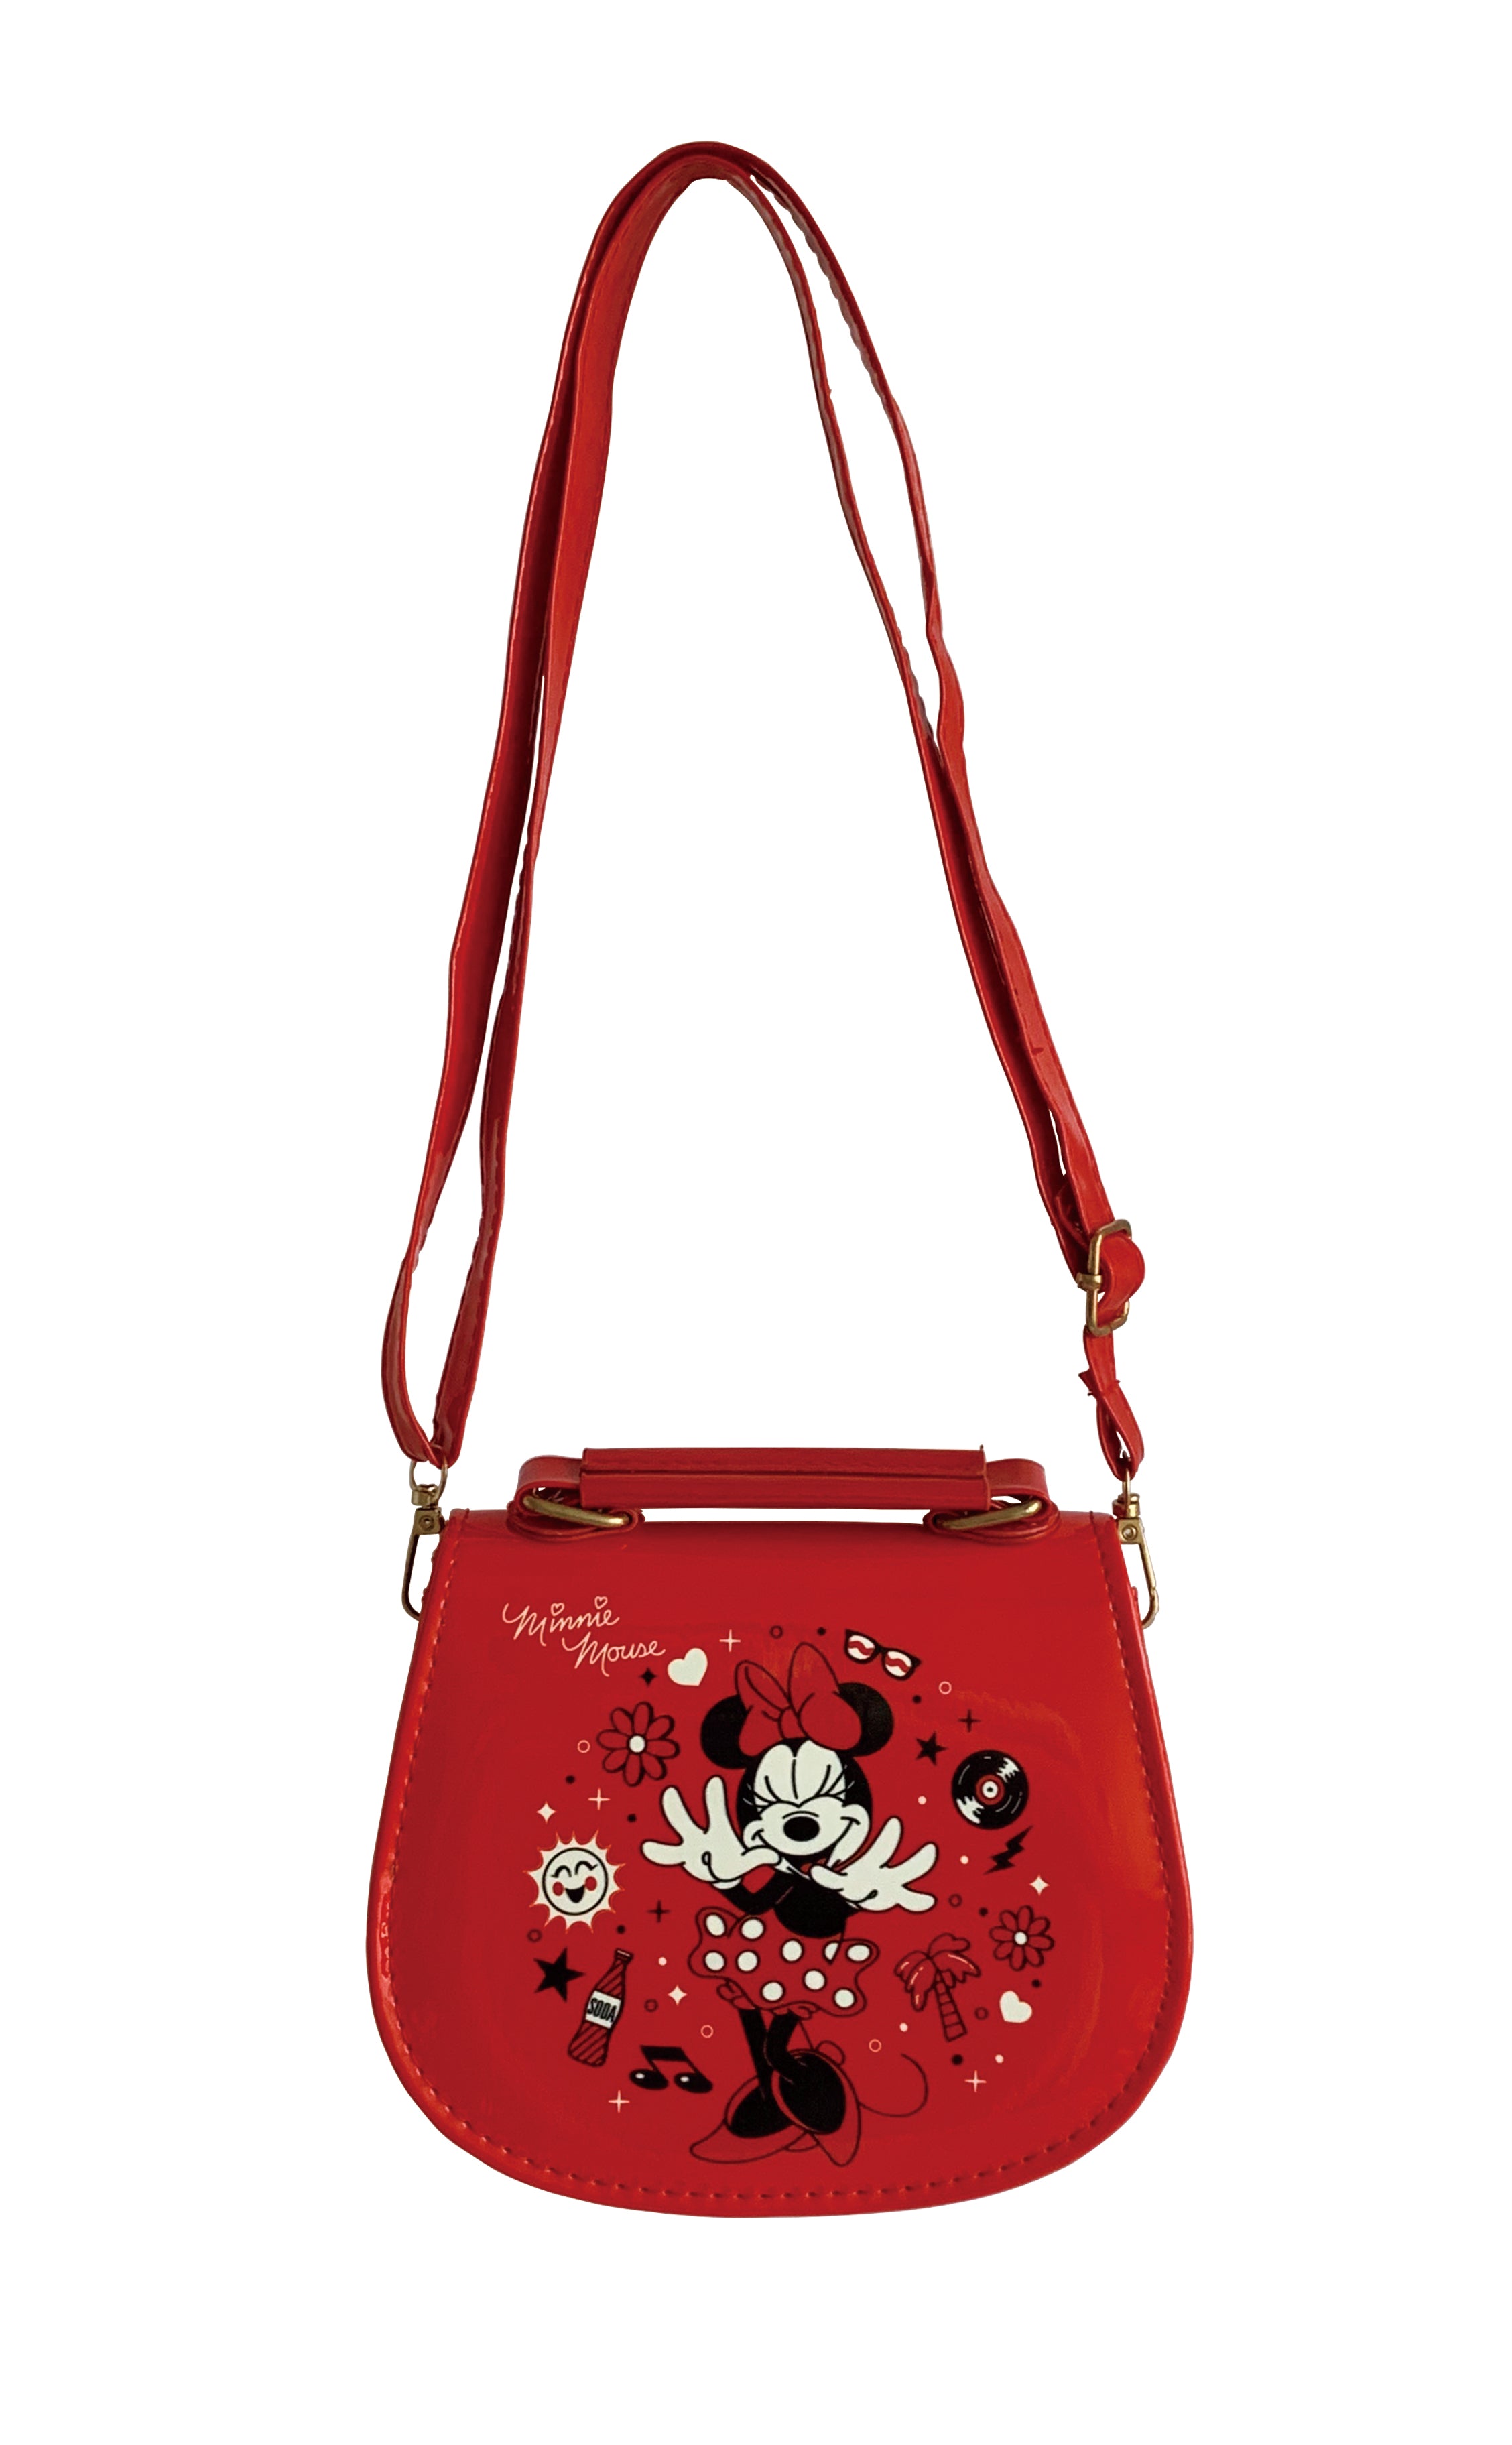 Minnie Mouse - Kids handbag DIS209 - Red-3